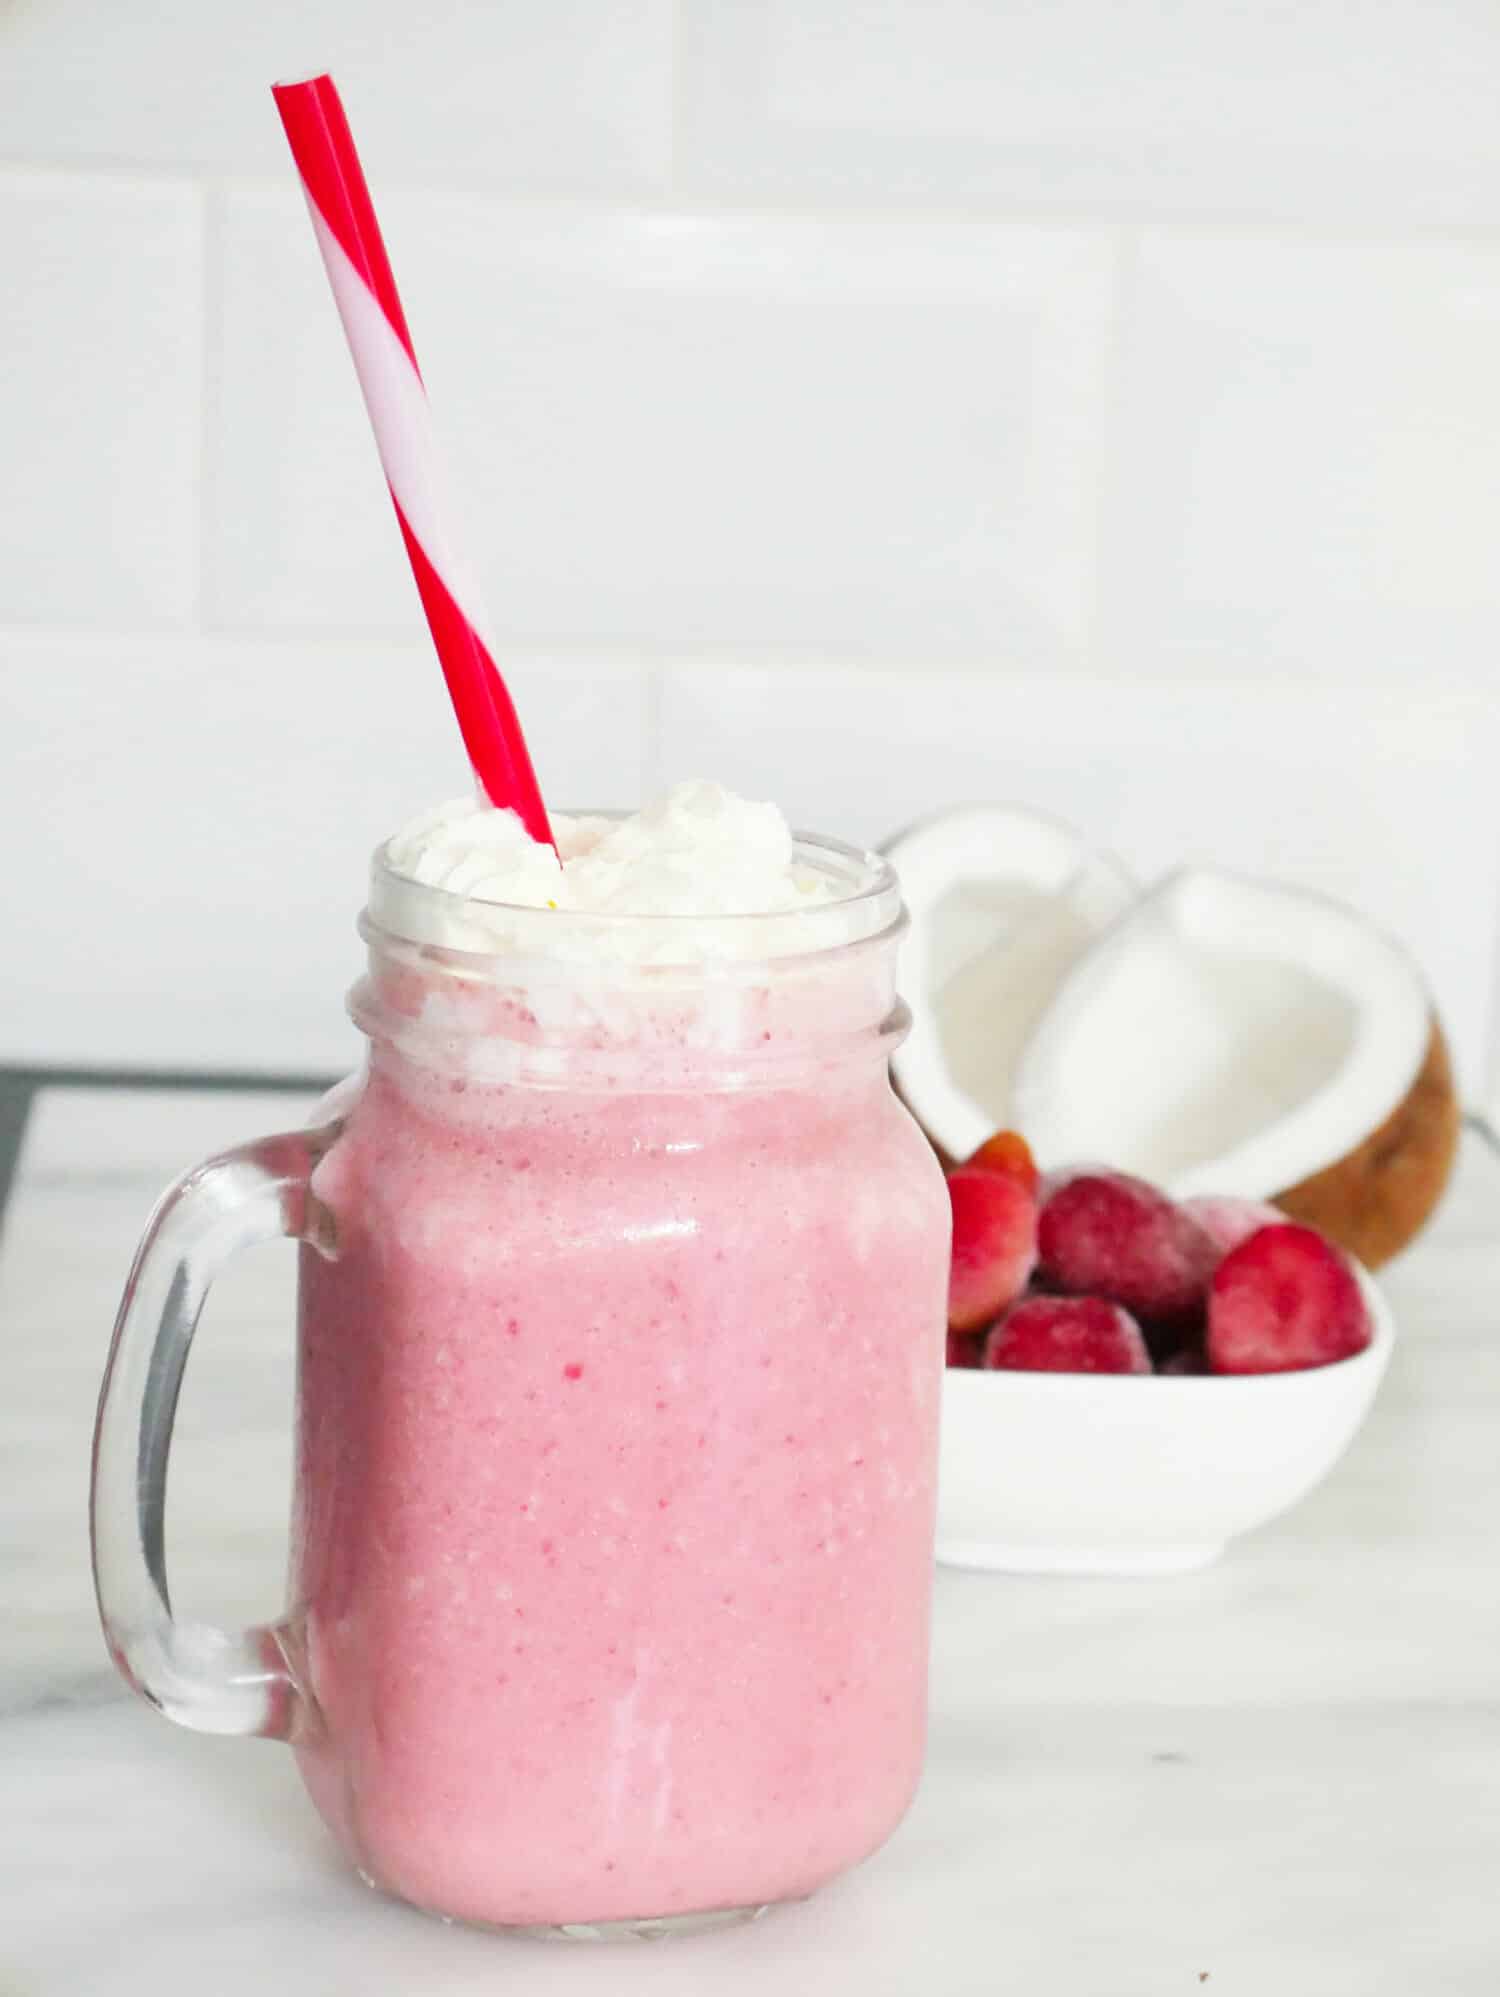 The freshest strawberry coconut milk smoothie recipe (+ tips!)